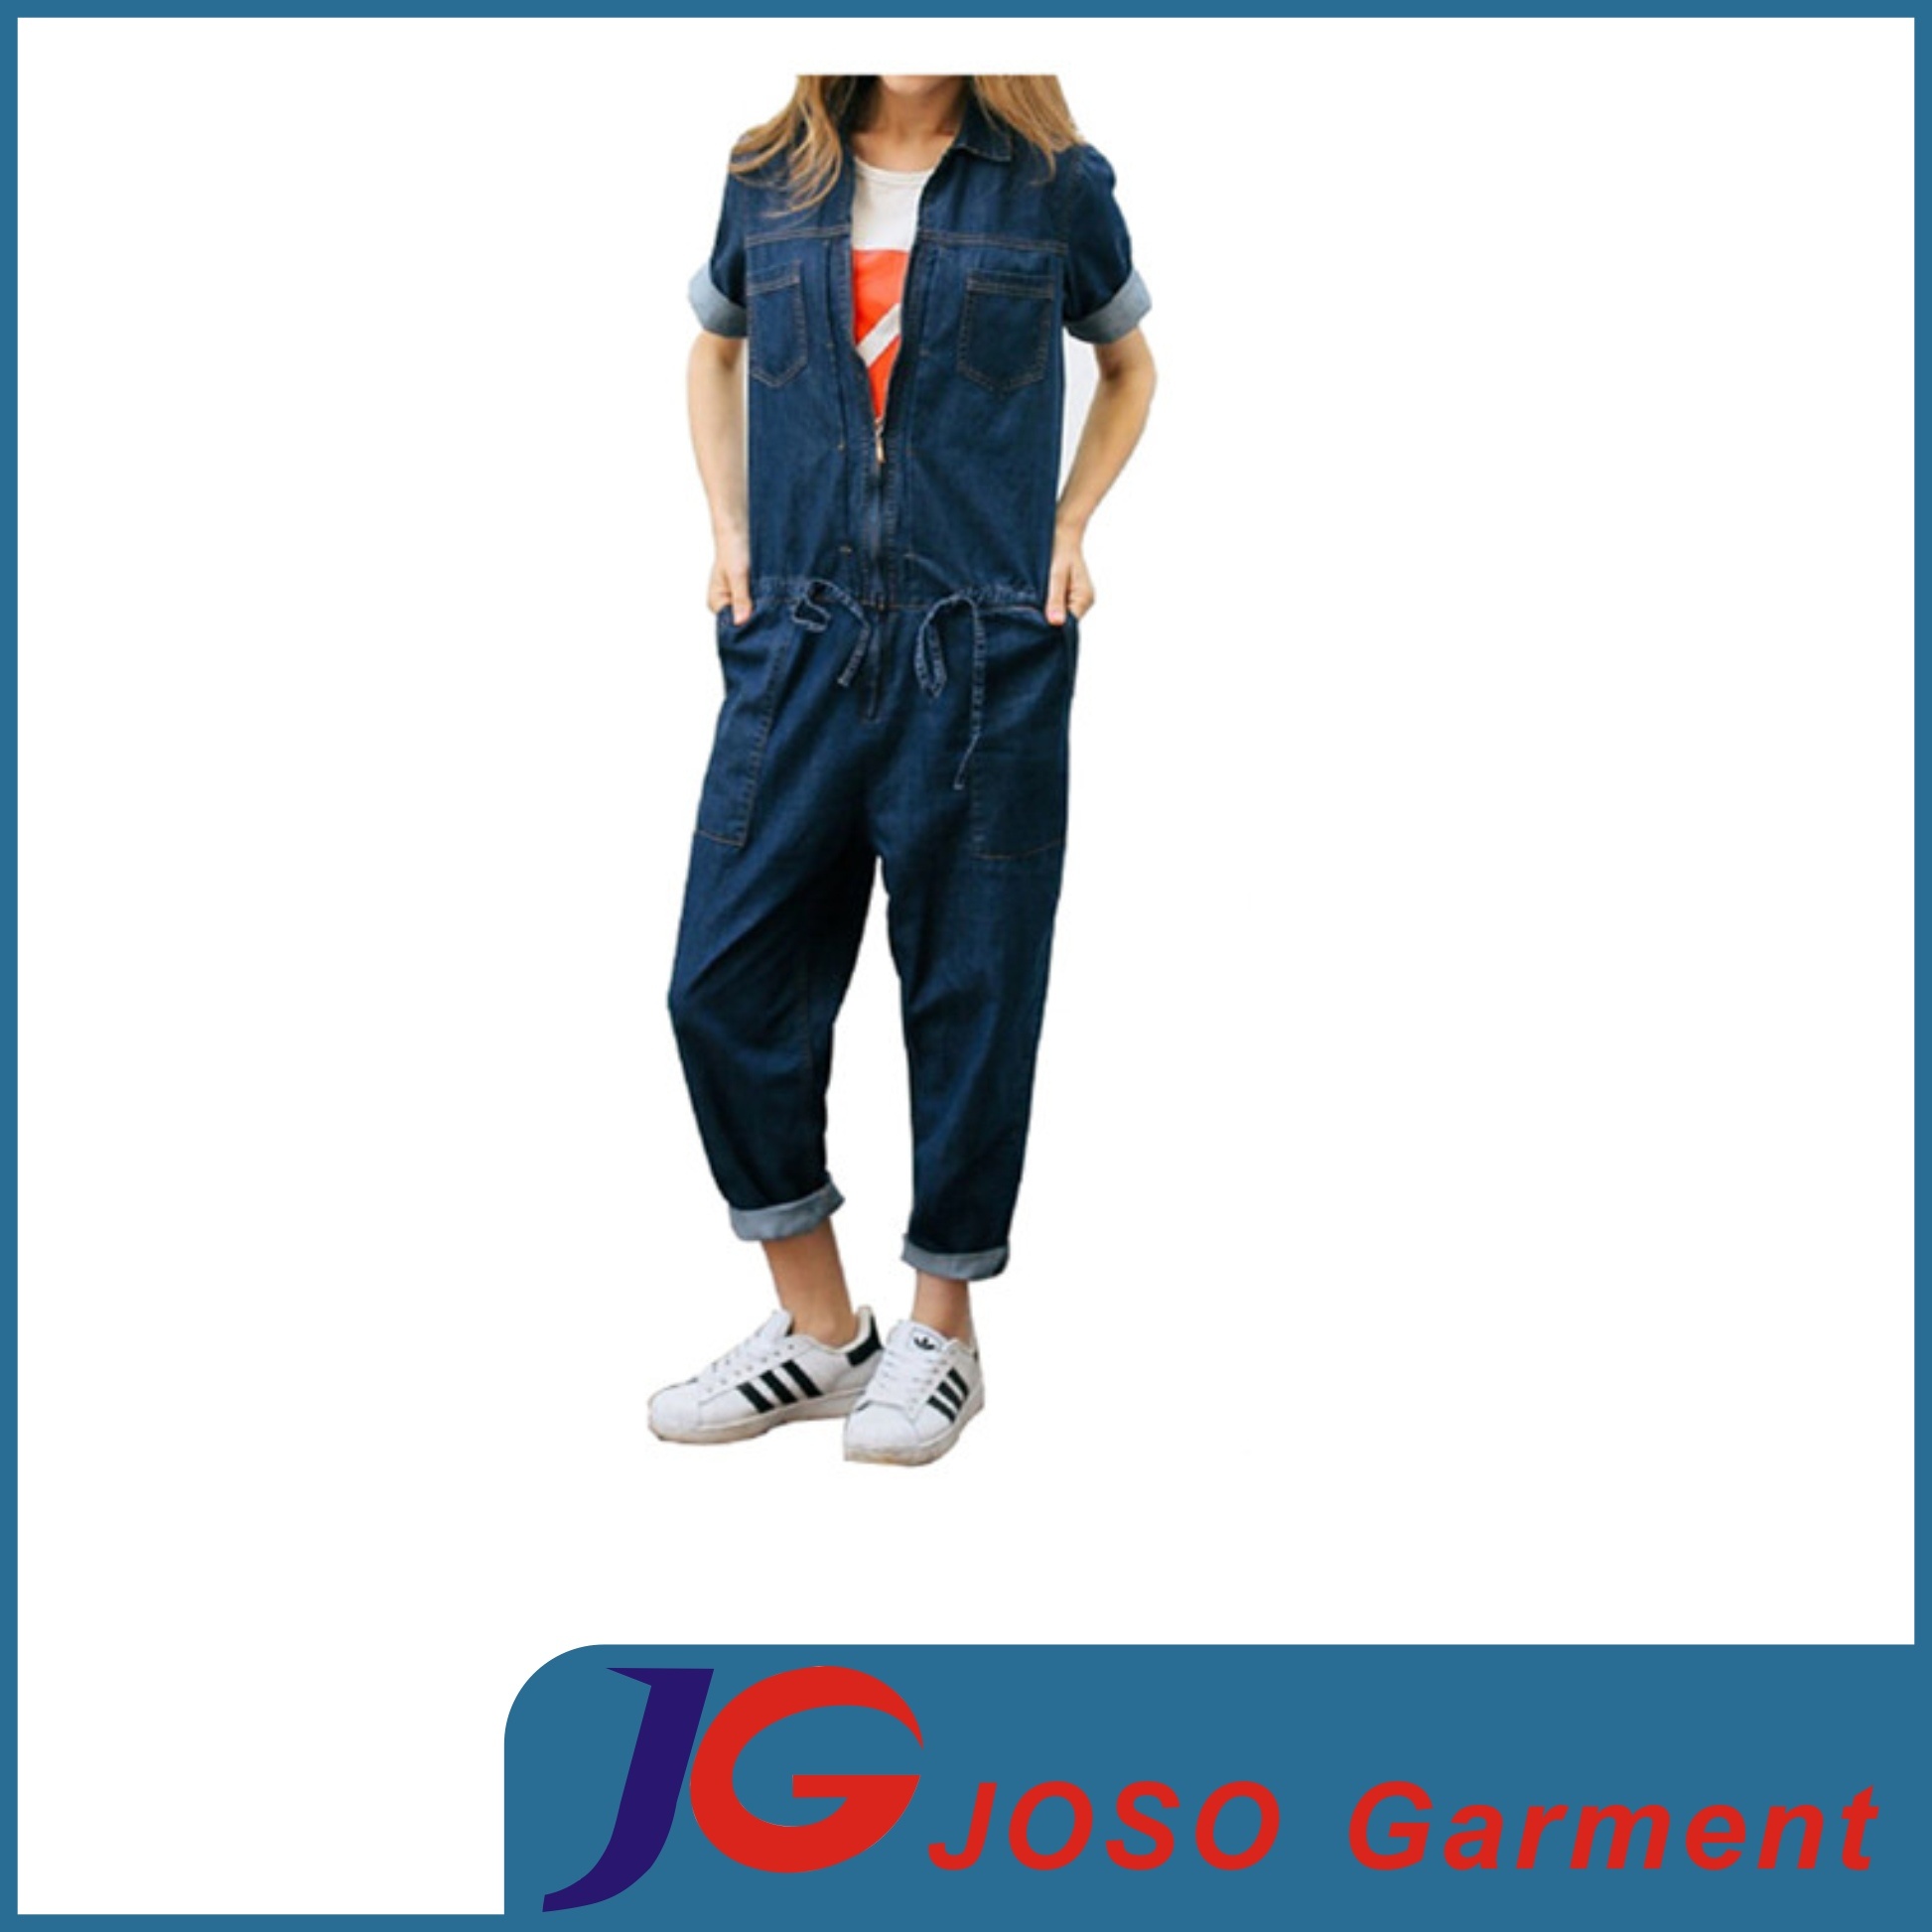 Comfortable Overall Women Denim Jeans Jc1345